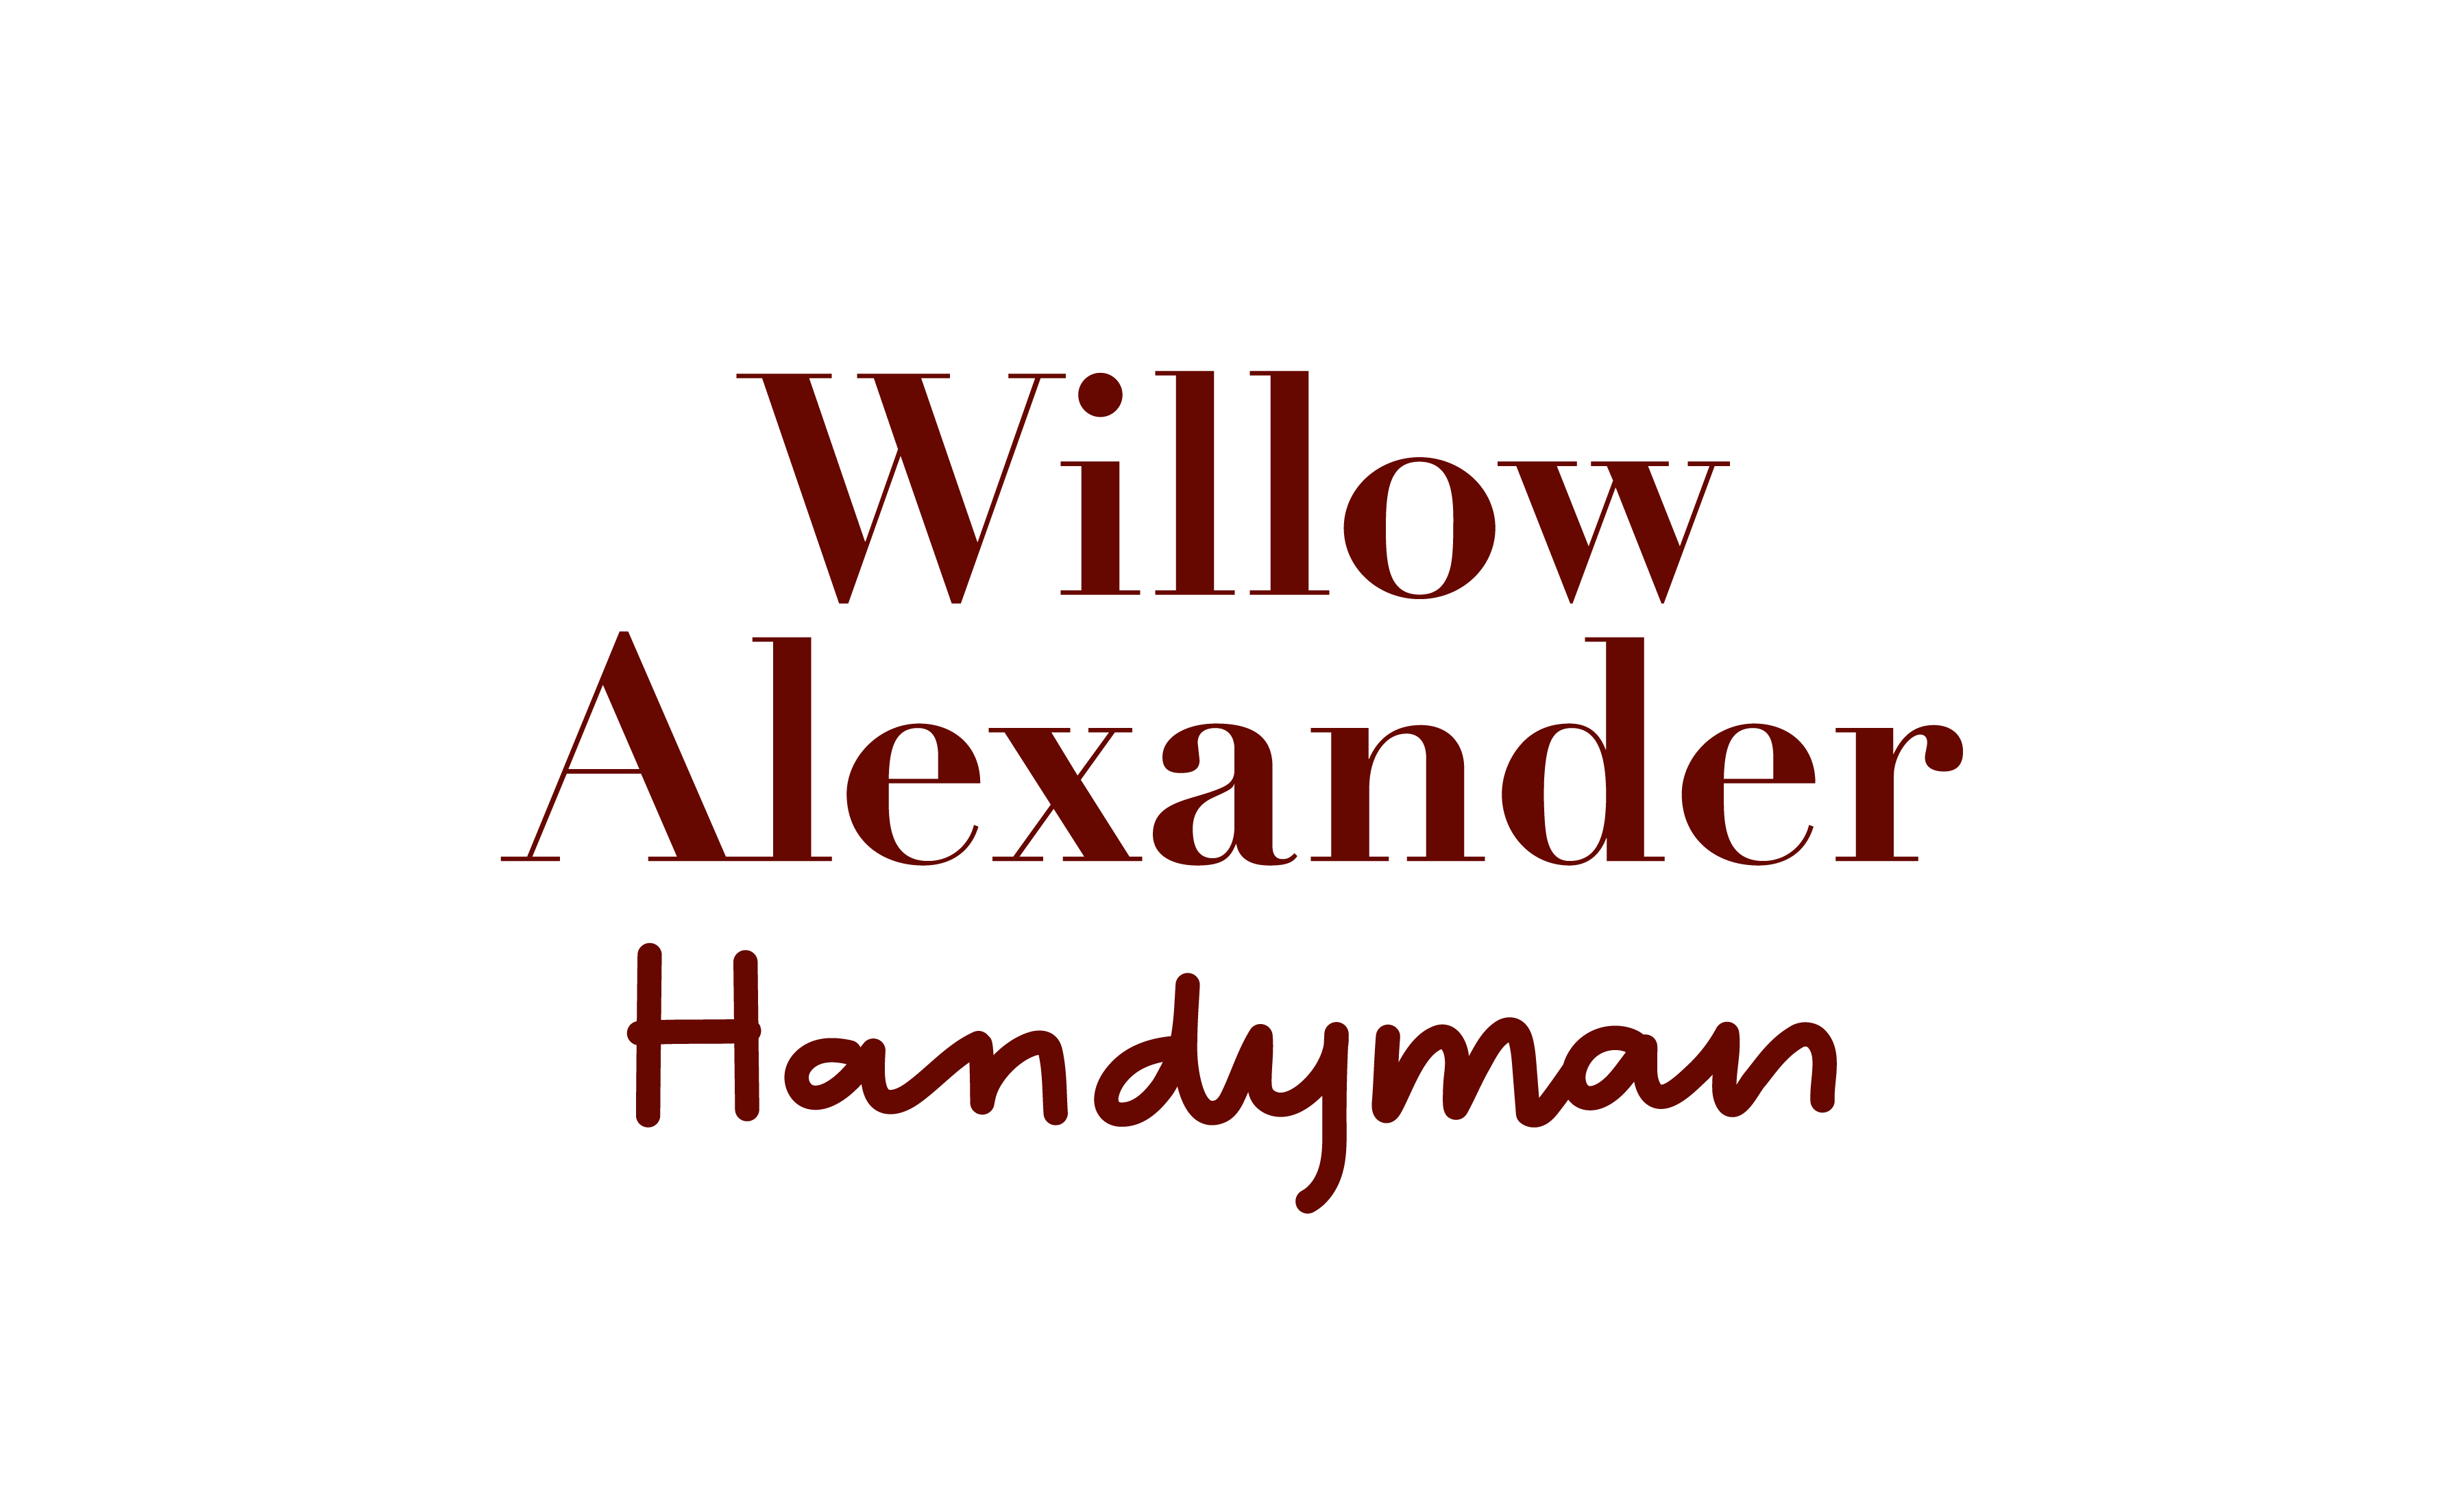 Willow Alexander Handyman